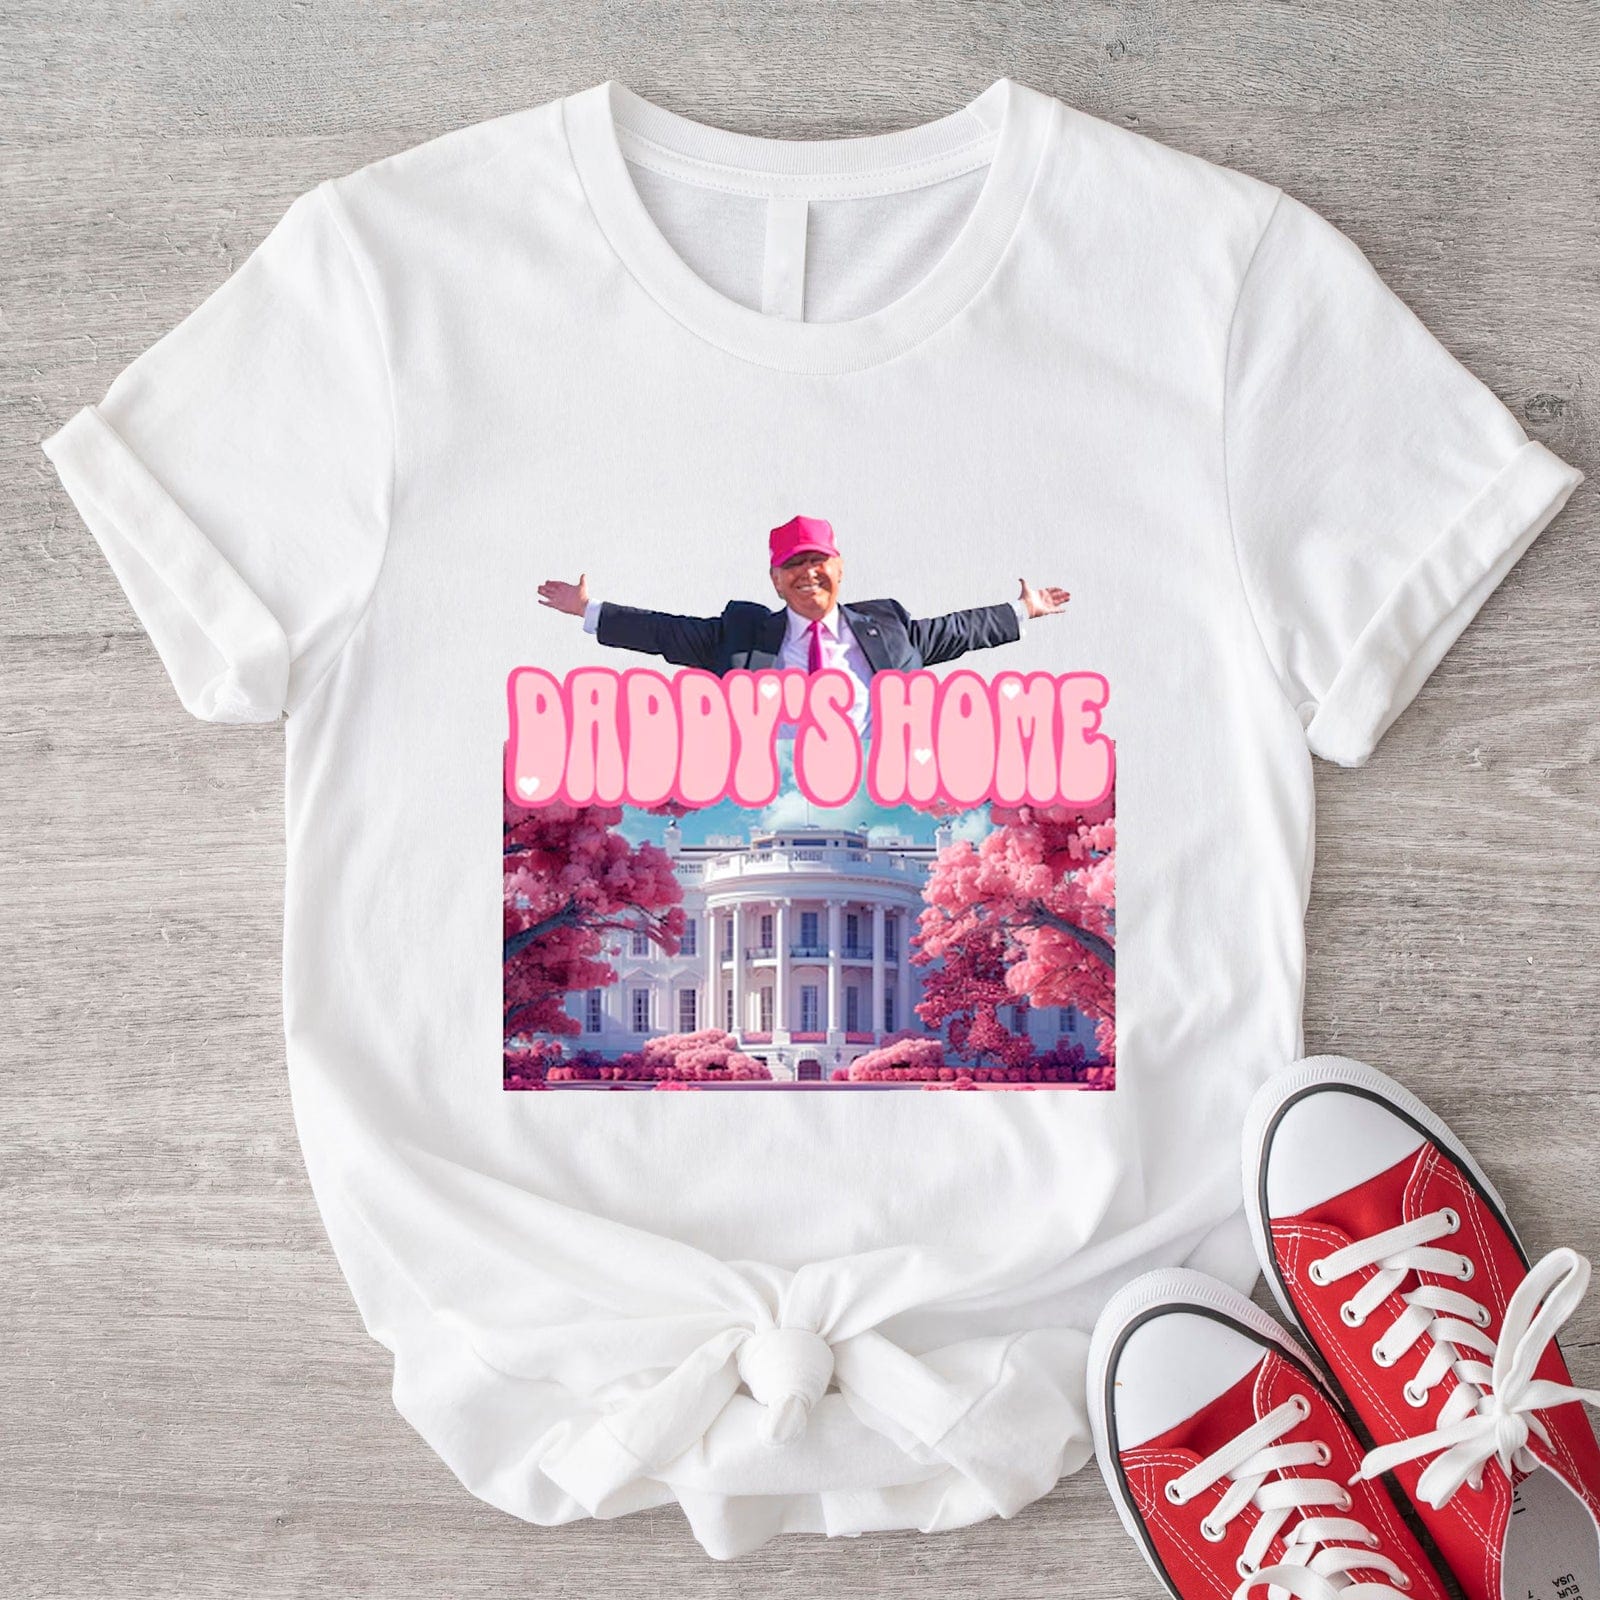 Funny Trump T Shirt, White House Shirt